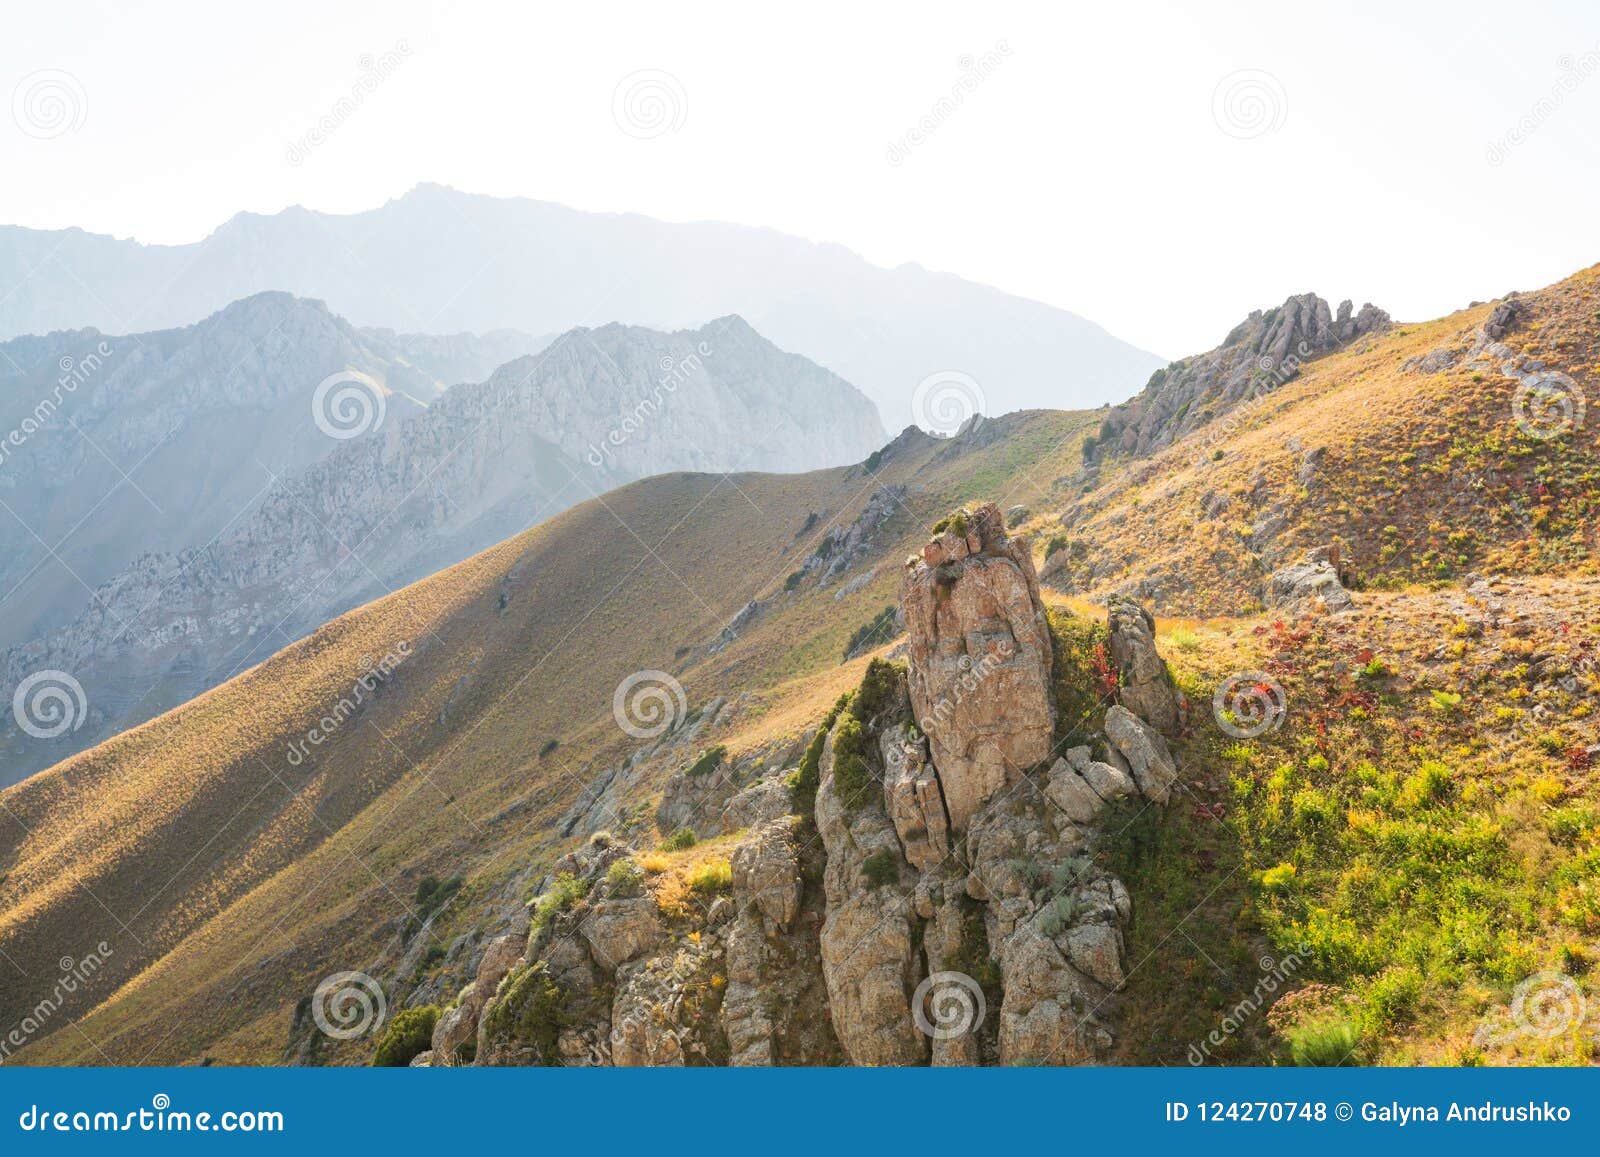 Chimgan mountains stock photo. Image of seasonal, rock - 124270748